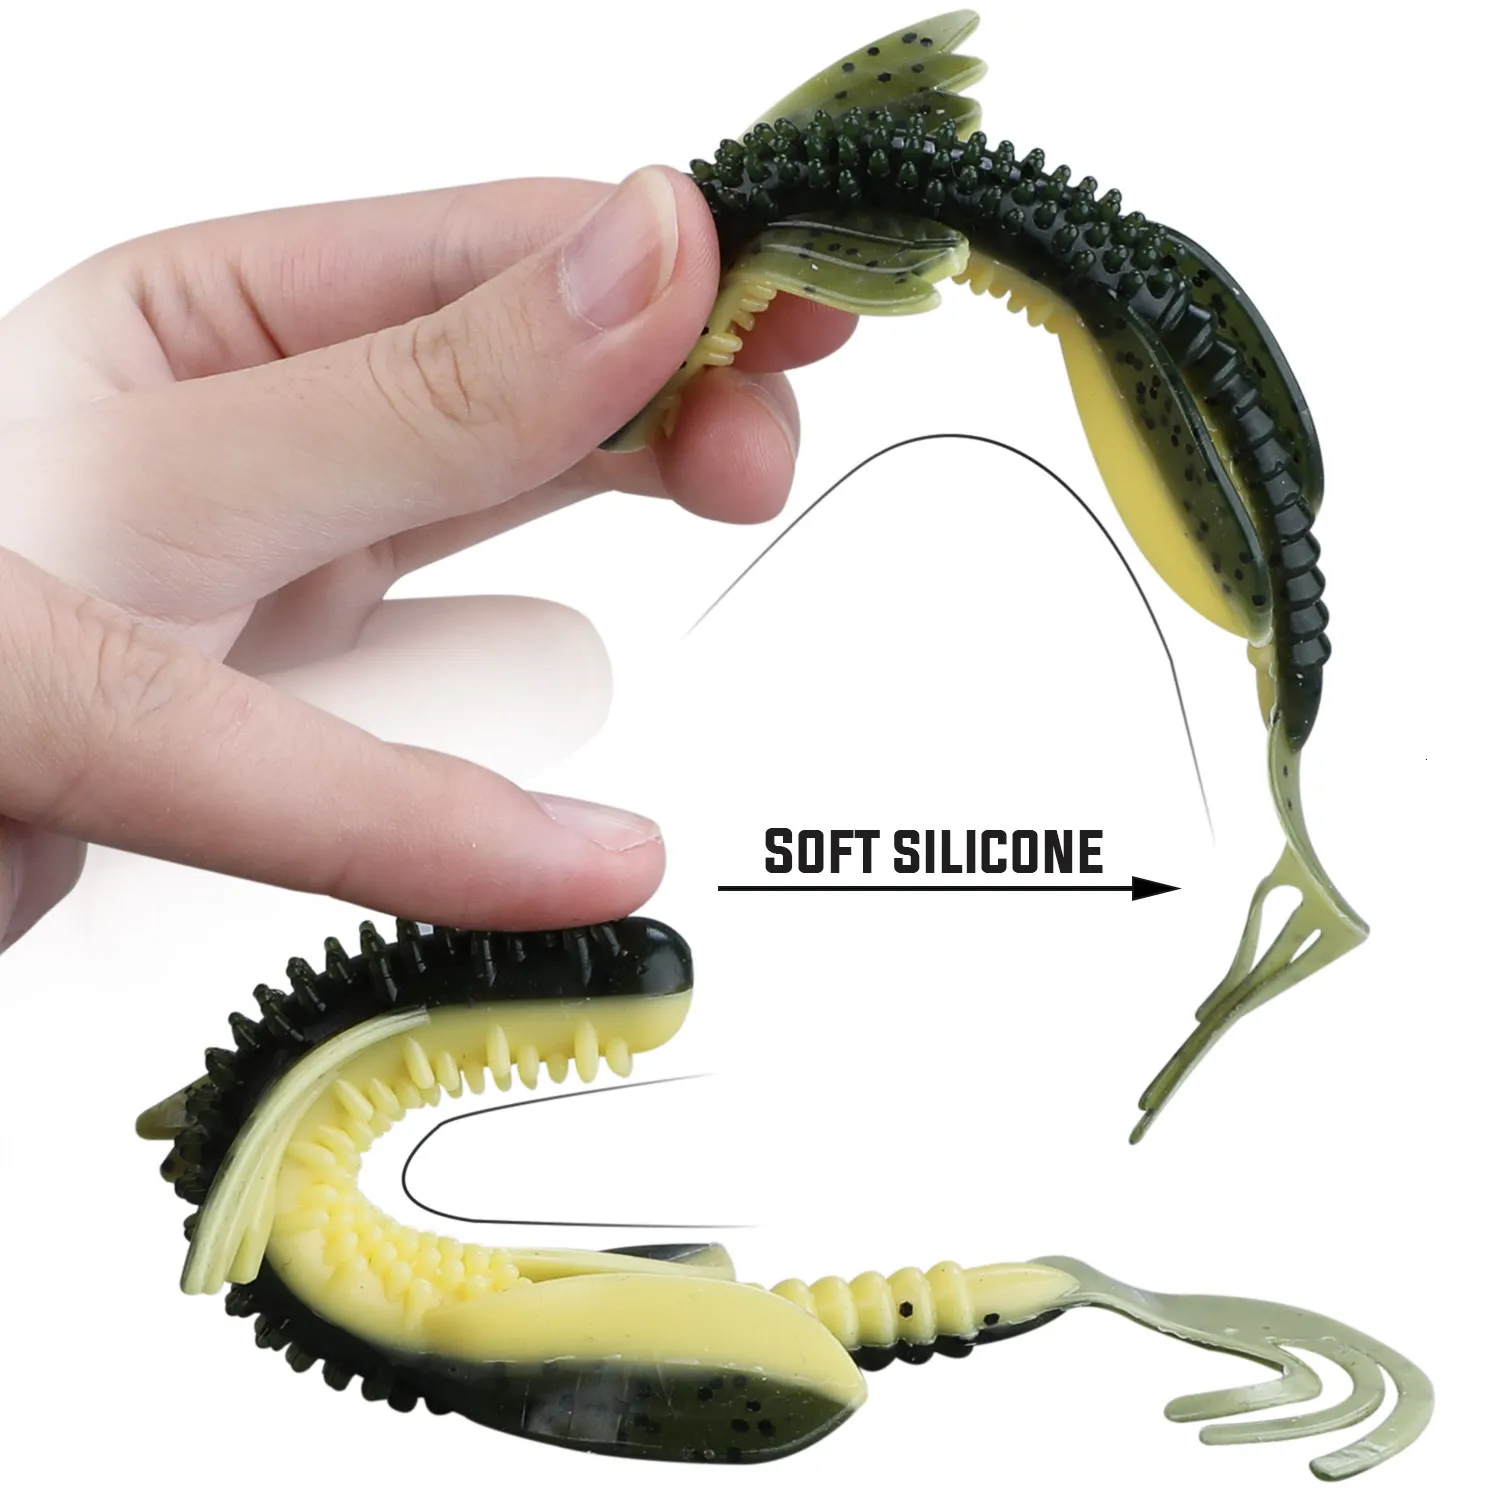 Sougayilang Fishing Lifelike Soft Rubber Catfish Bait, 10g/125mm, Saltwater/Freshwater  230504 From Piao09, $7.2